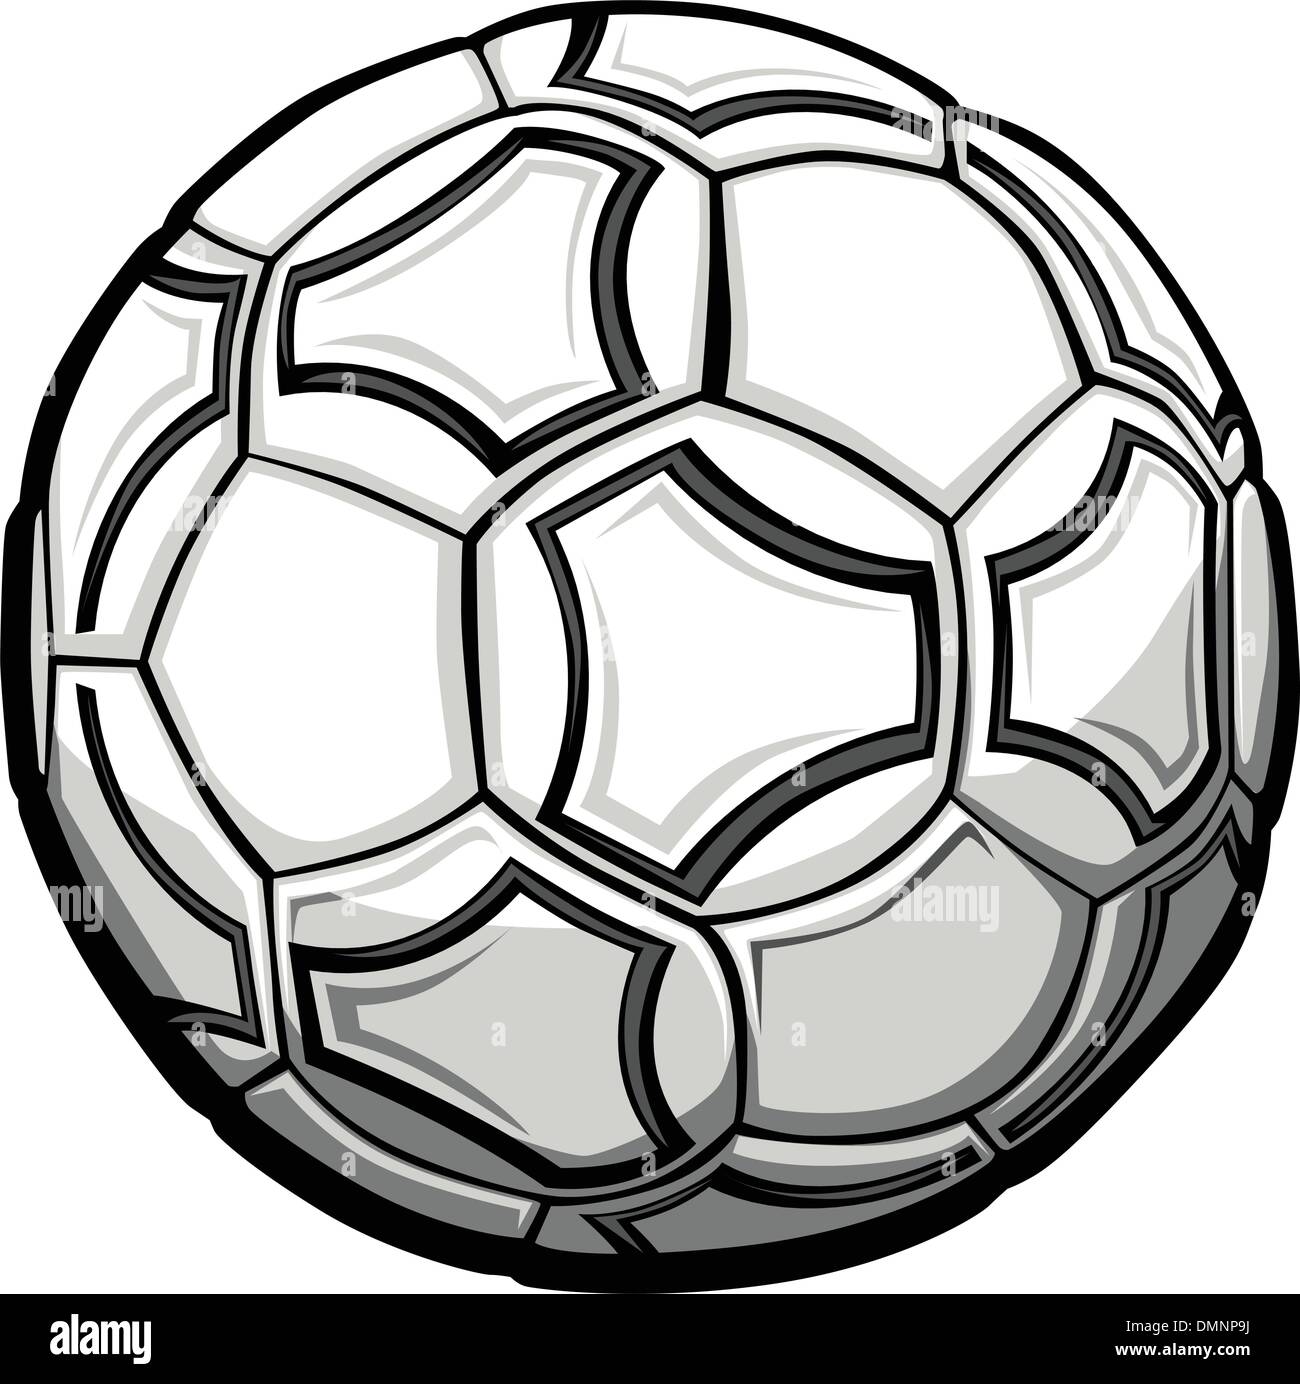 Soccer Ball Graphic Vector Illustration Stock Vector